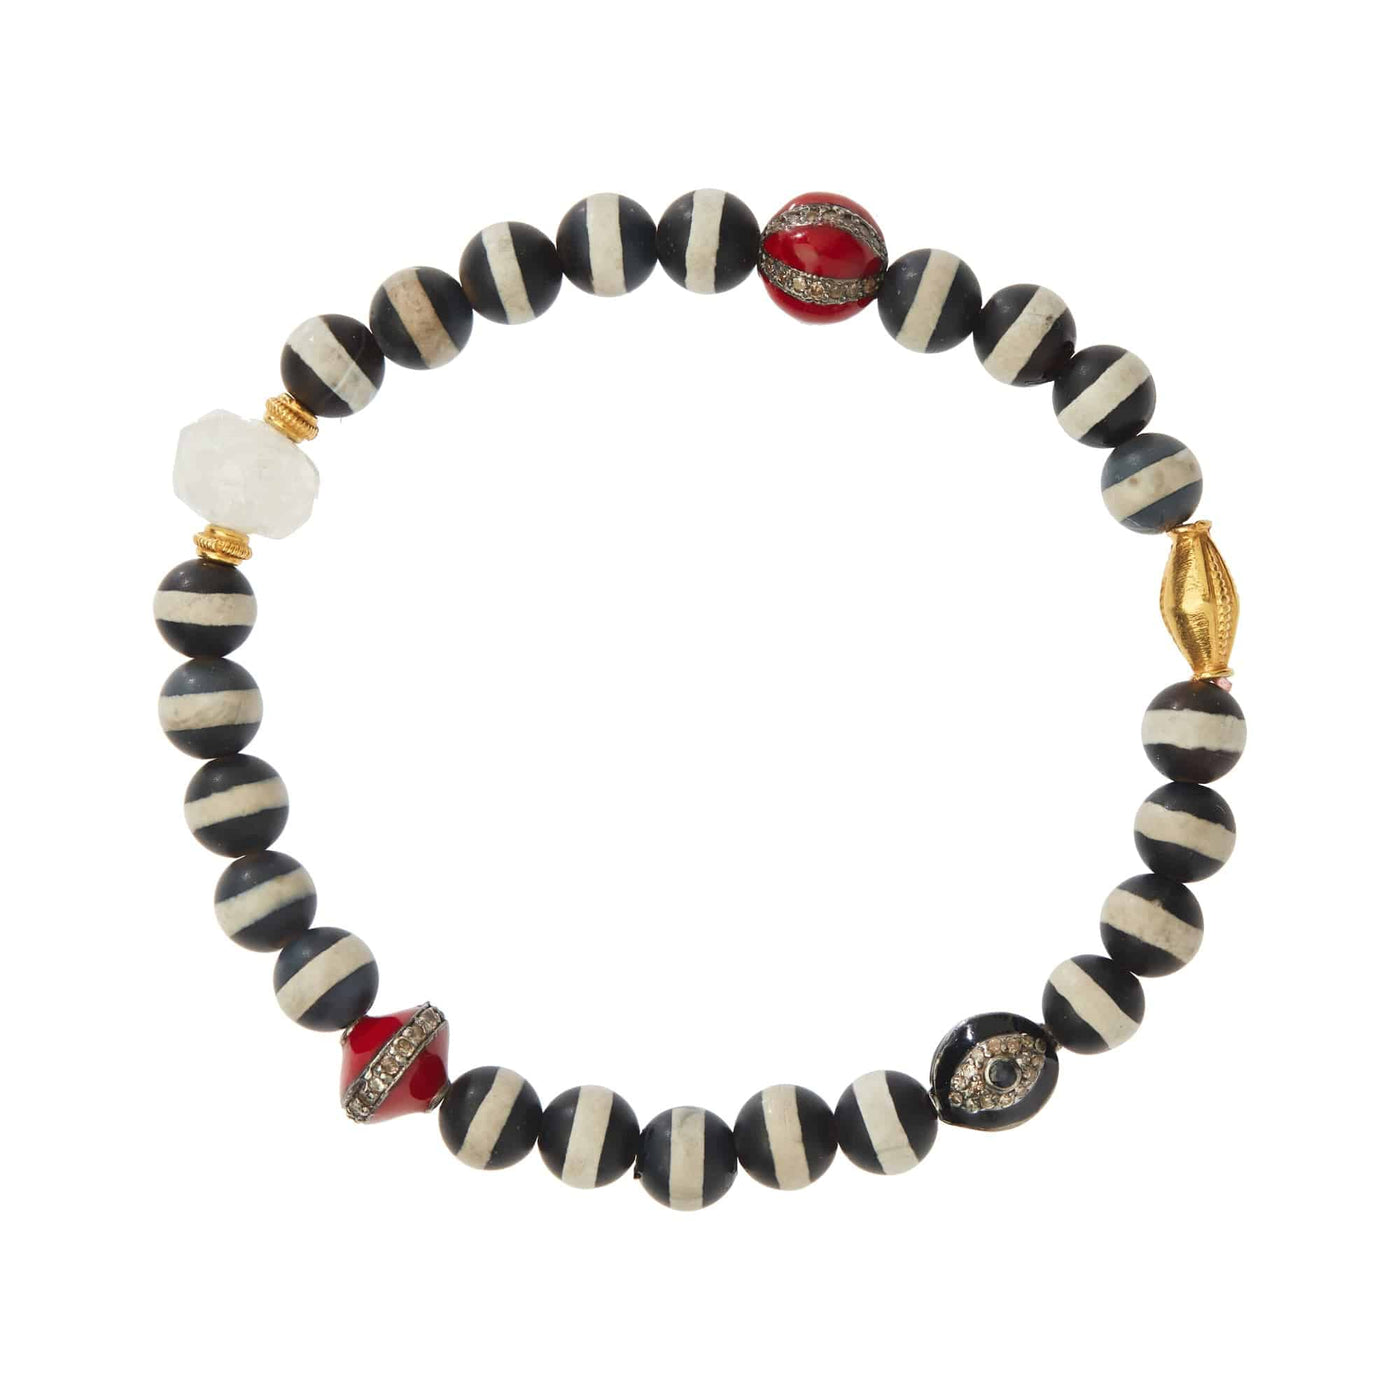 Black Agate Stripe Bracelet 30 - Globetrotter - Ileana Makri store